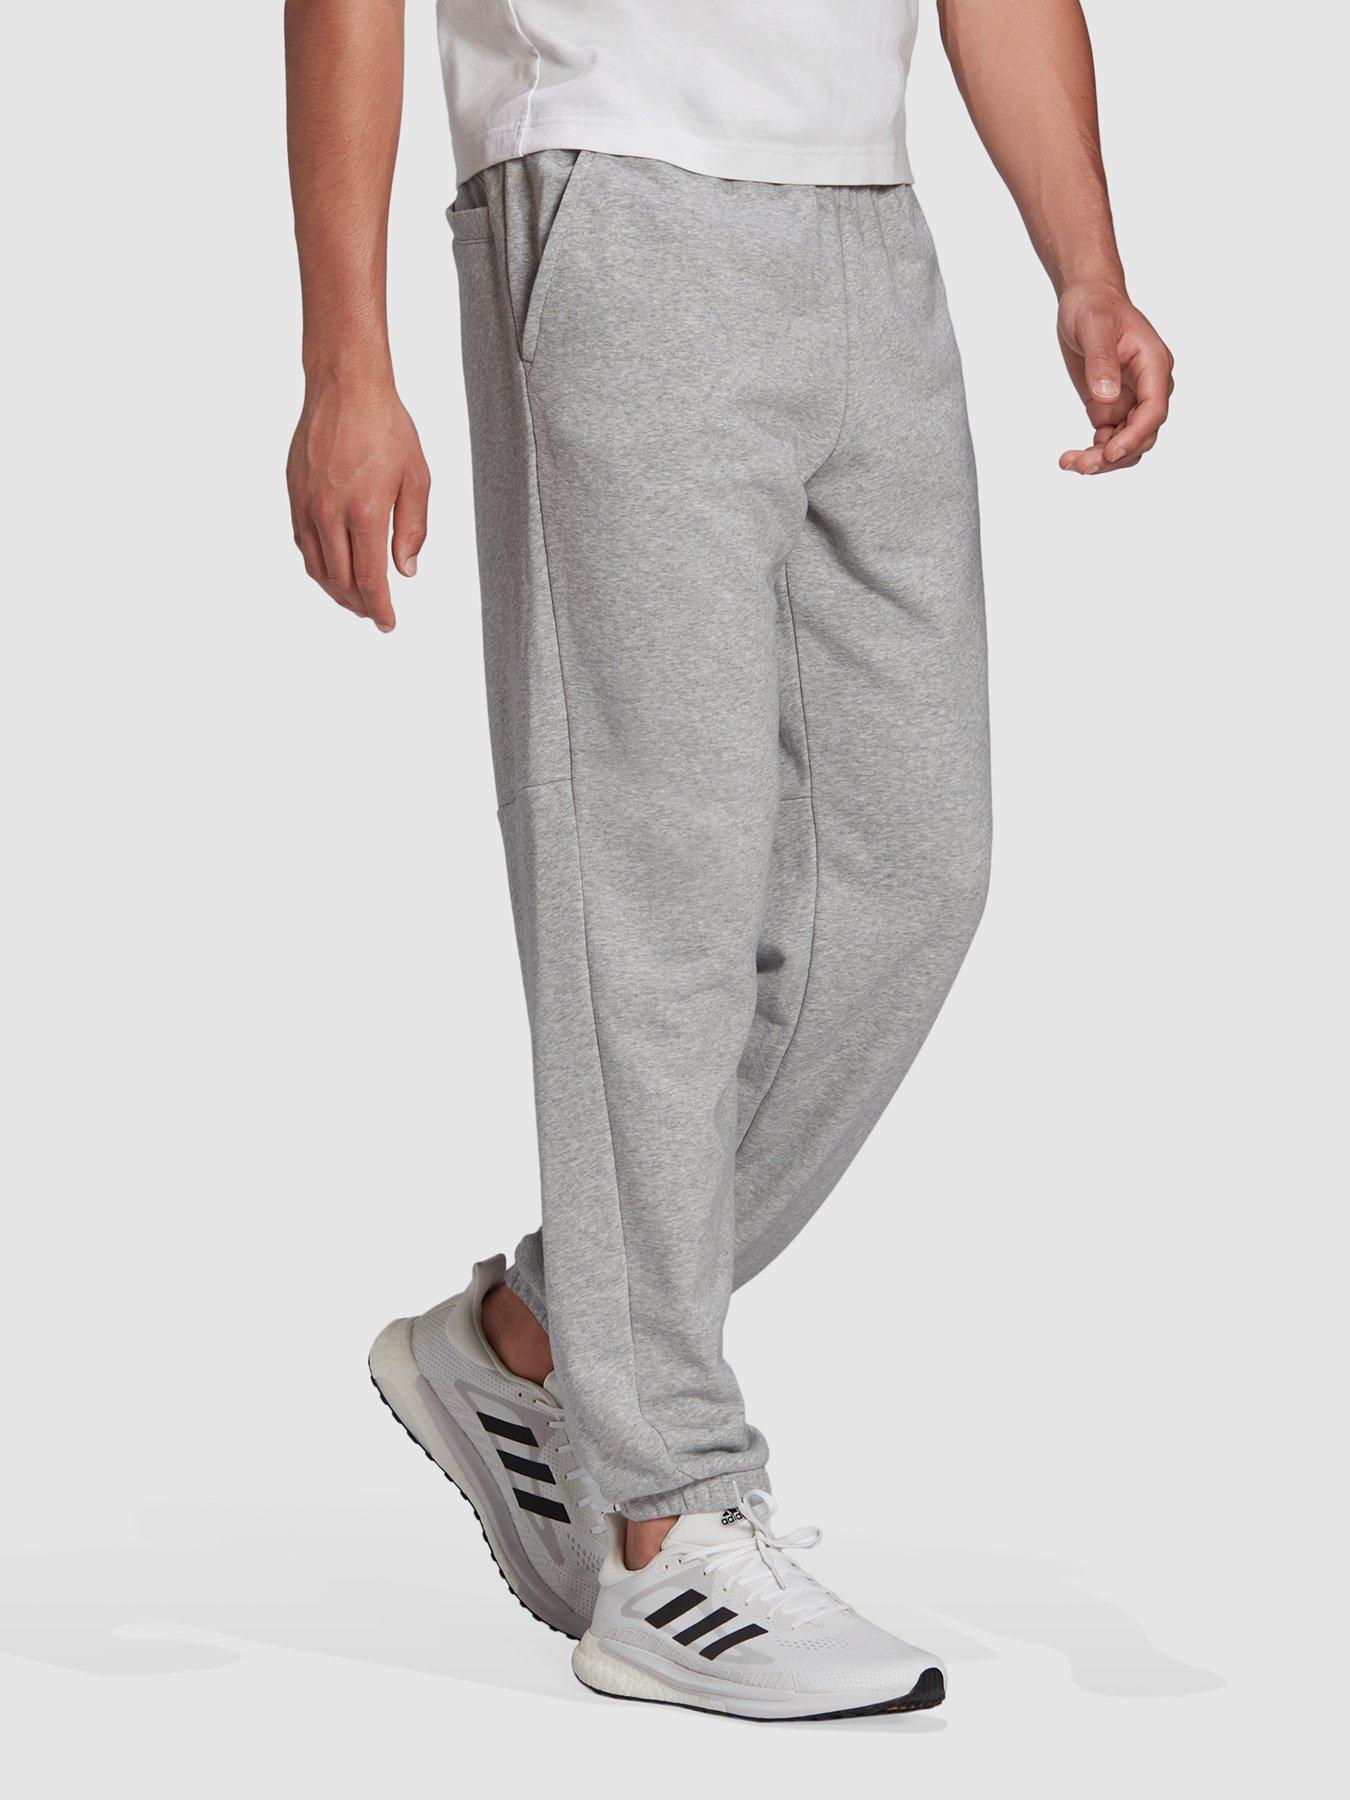  Future Icons Pants (Plus Size) - Medium Grey Heather